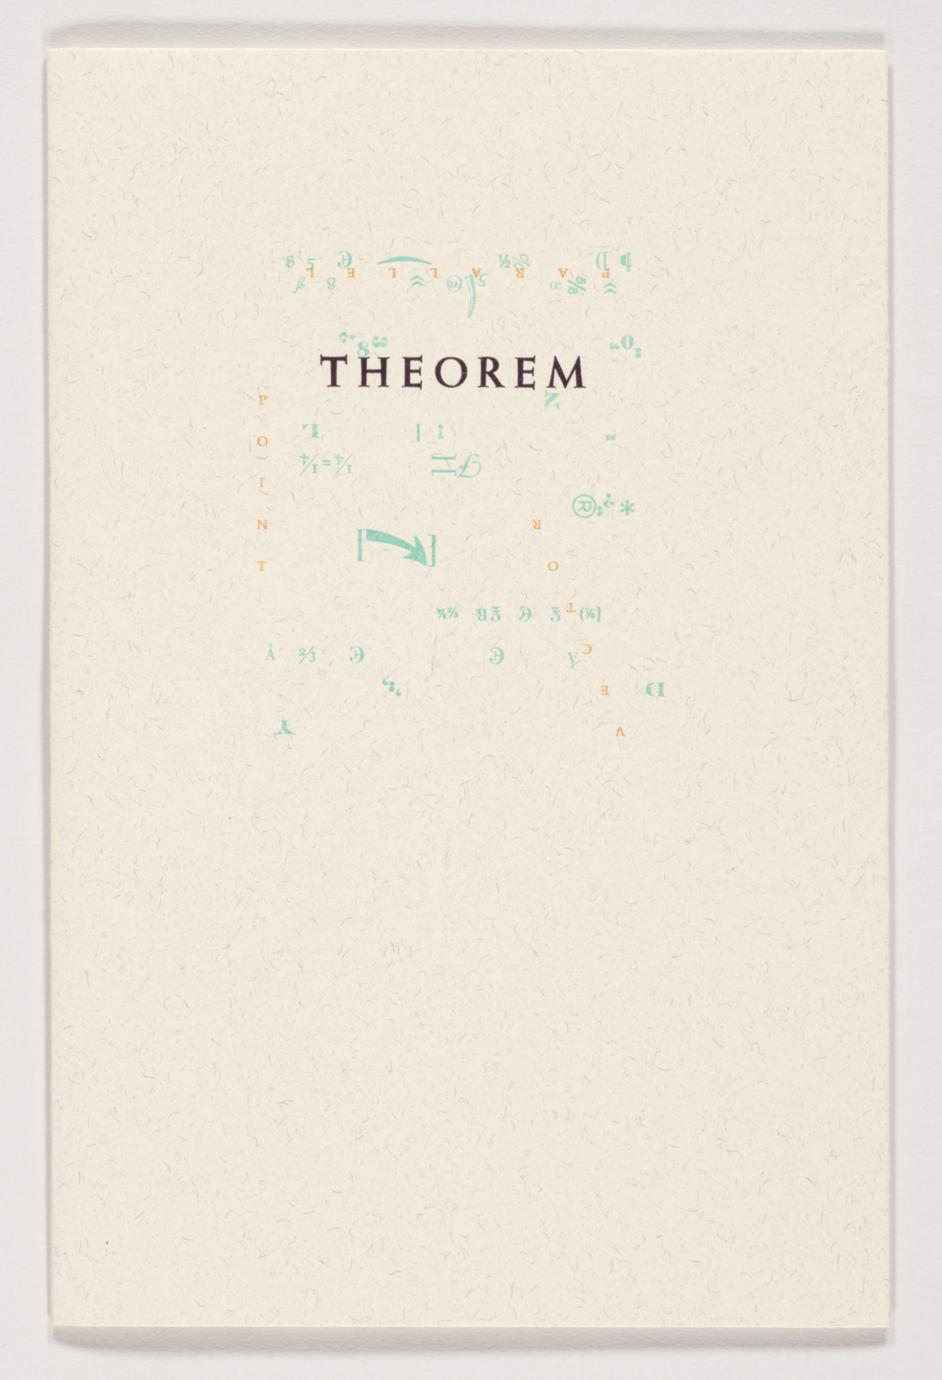 Theorem (1 of 2)